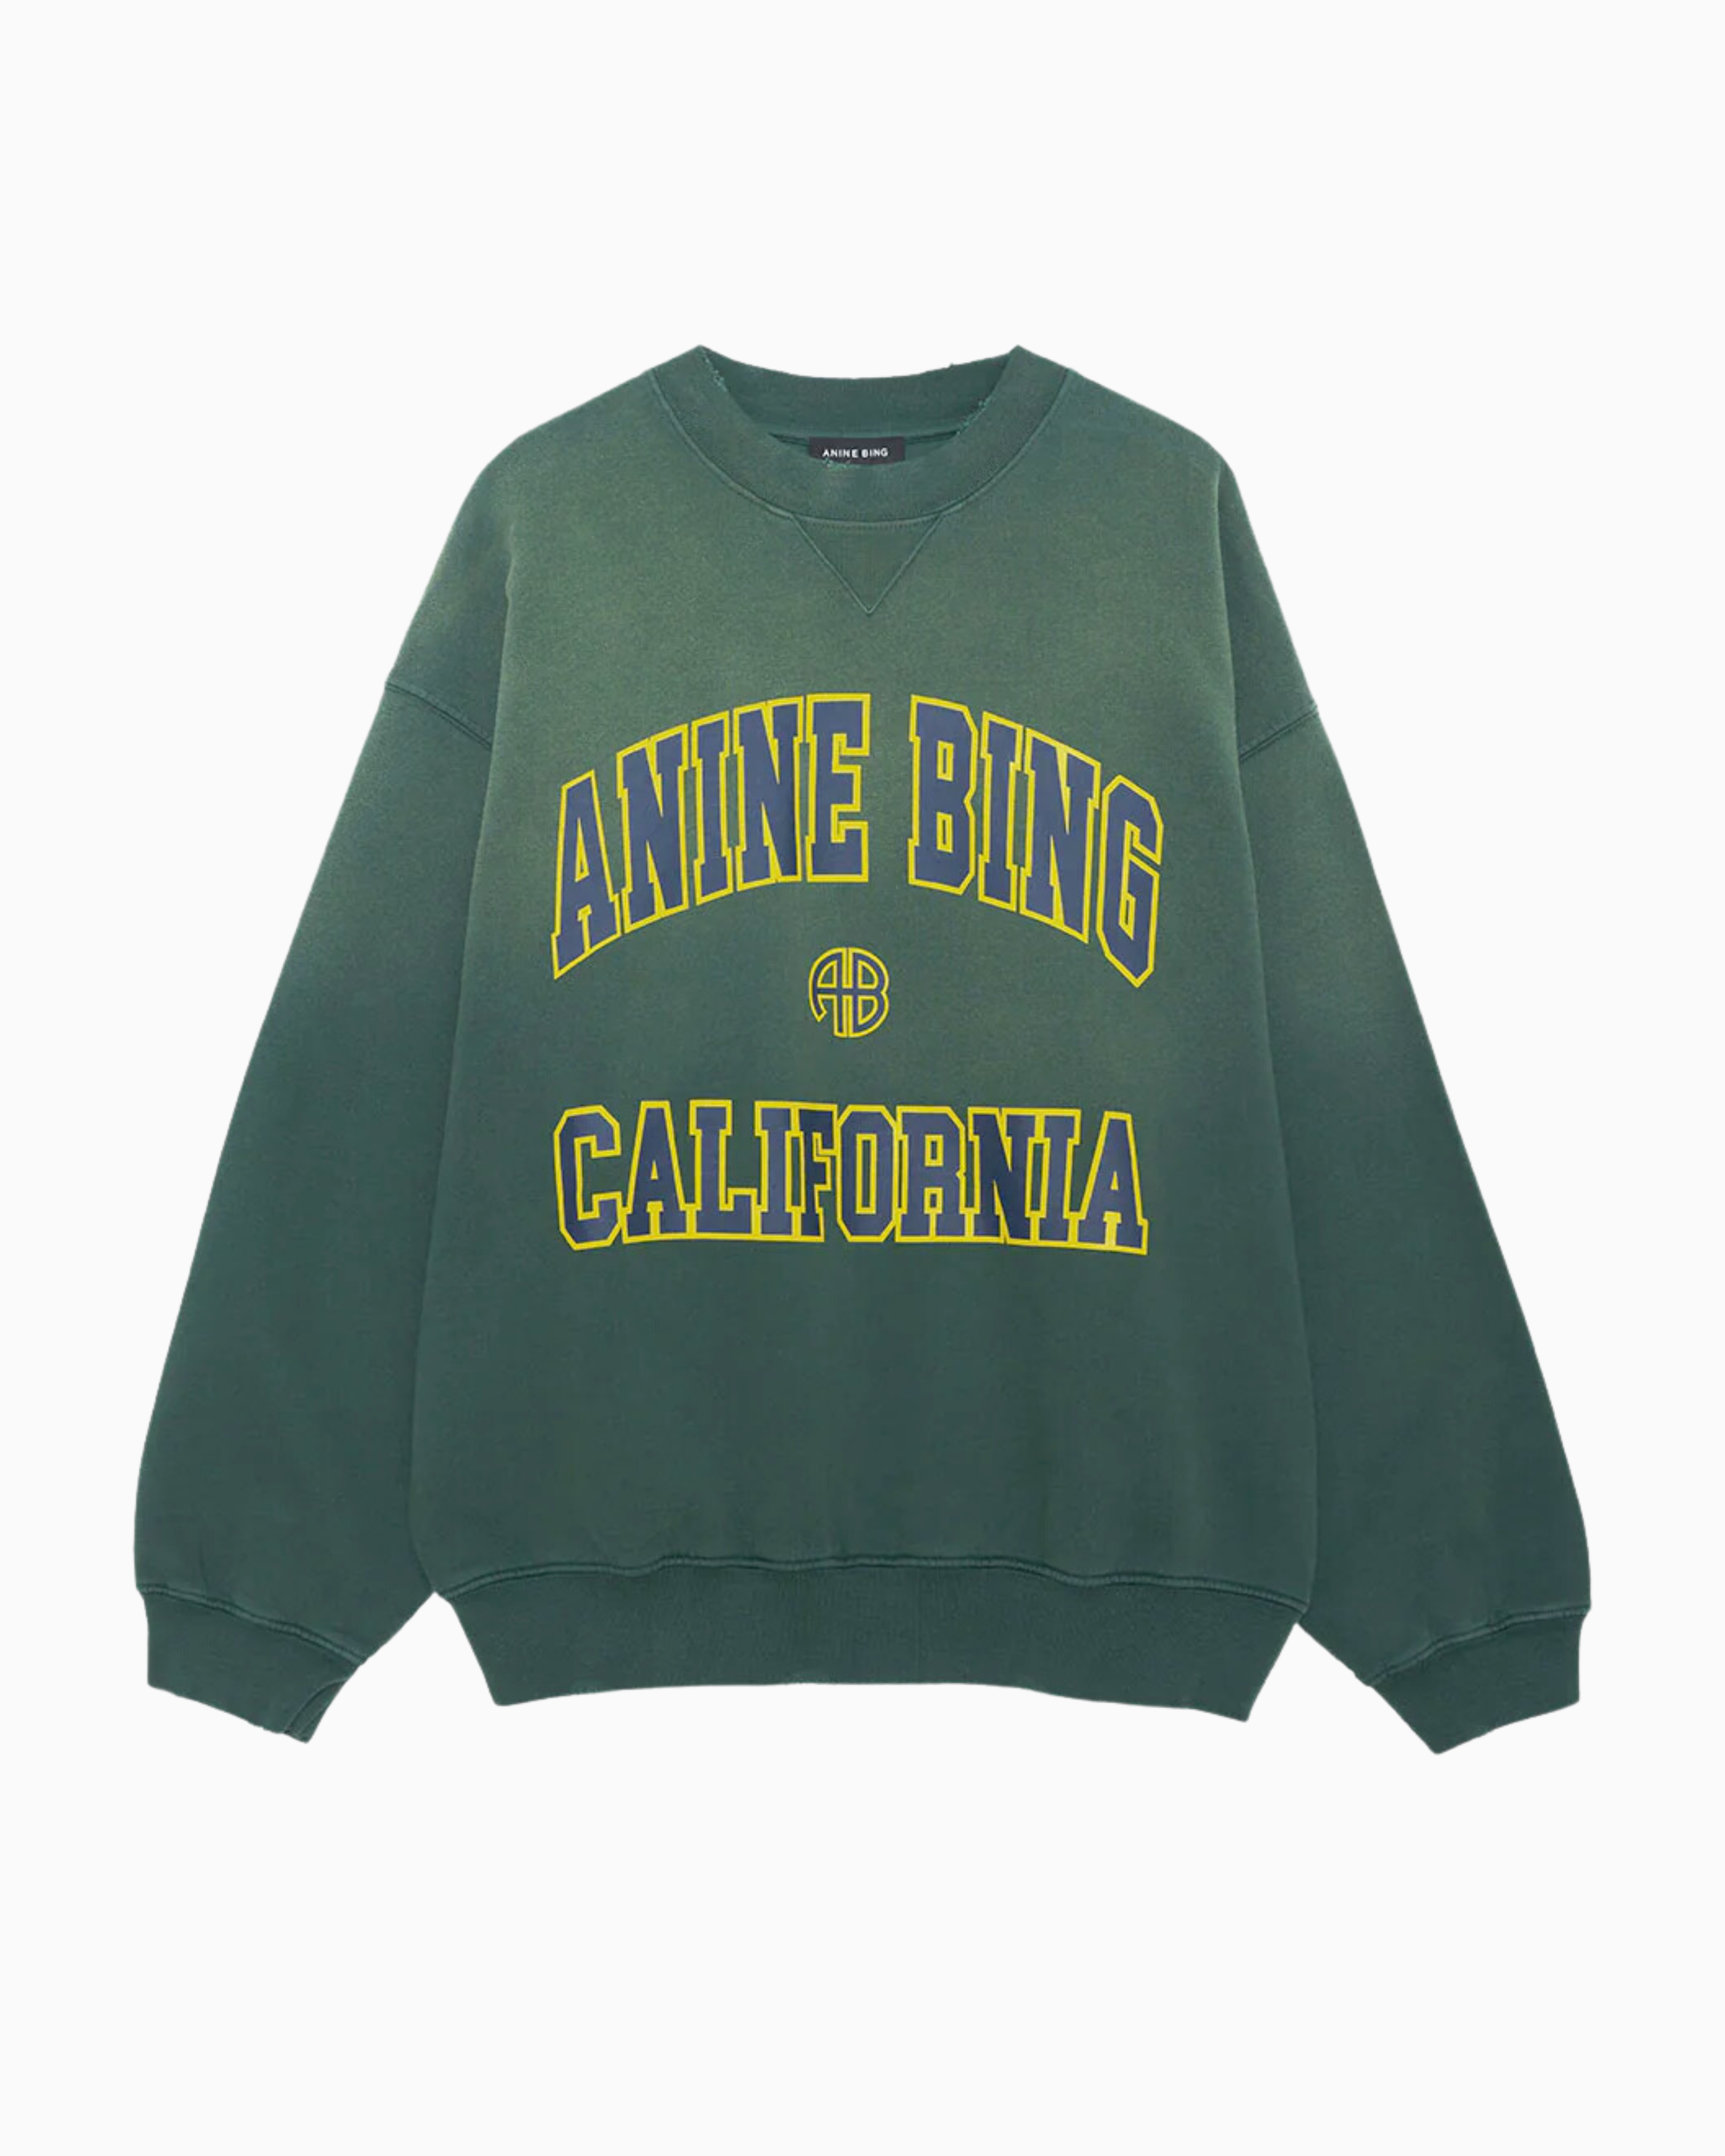 Anine Bing Jaci Sweatshirt in California Washed Faded Green